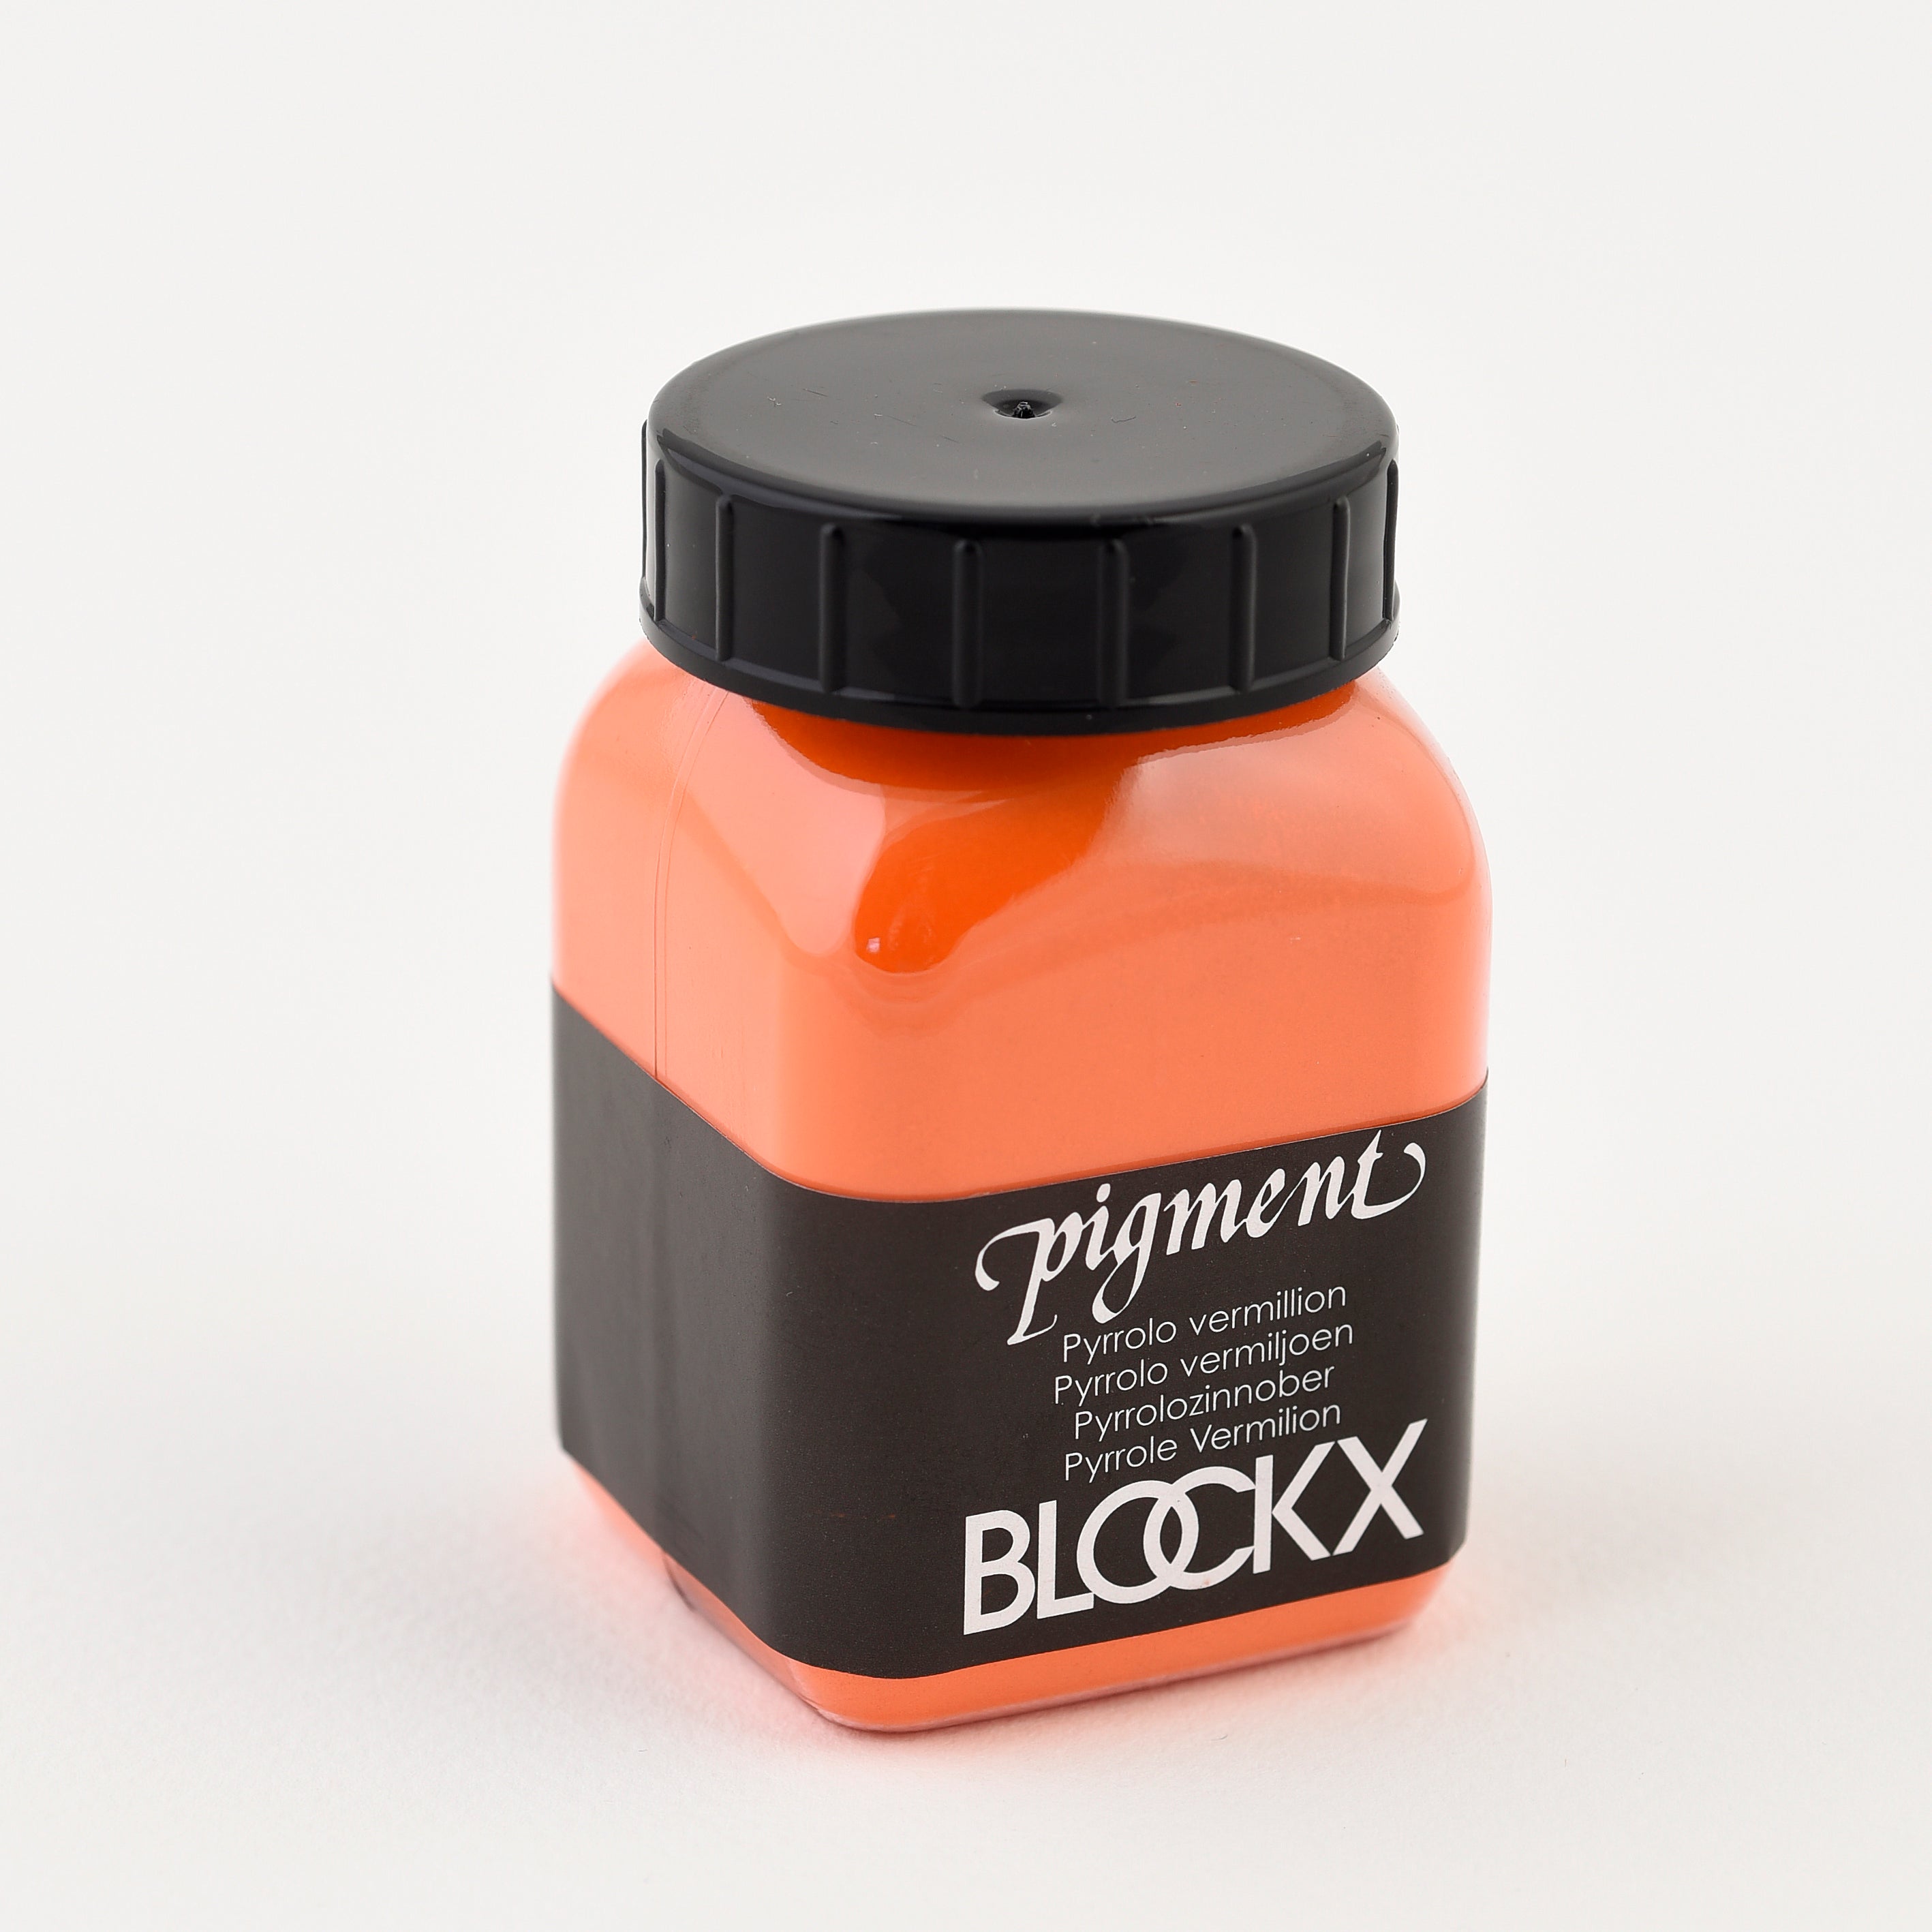 BLOCKX Pigment 100ml/30g Pyrrole Vermilion